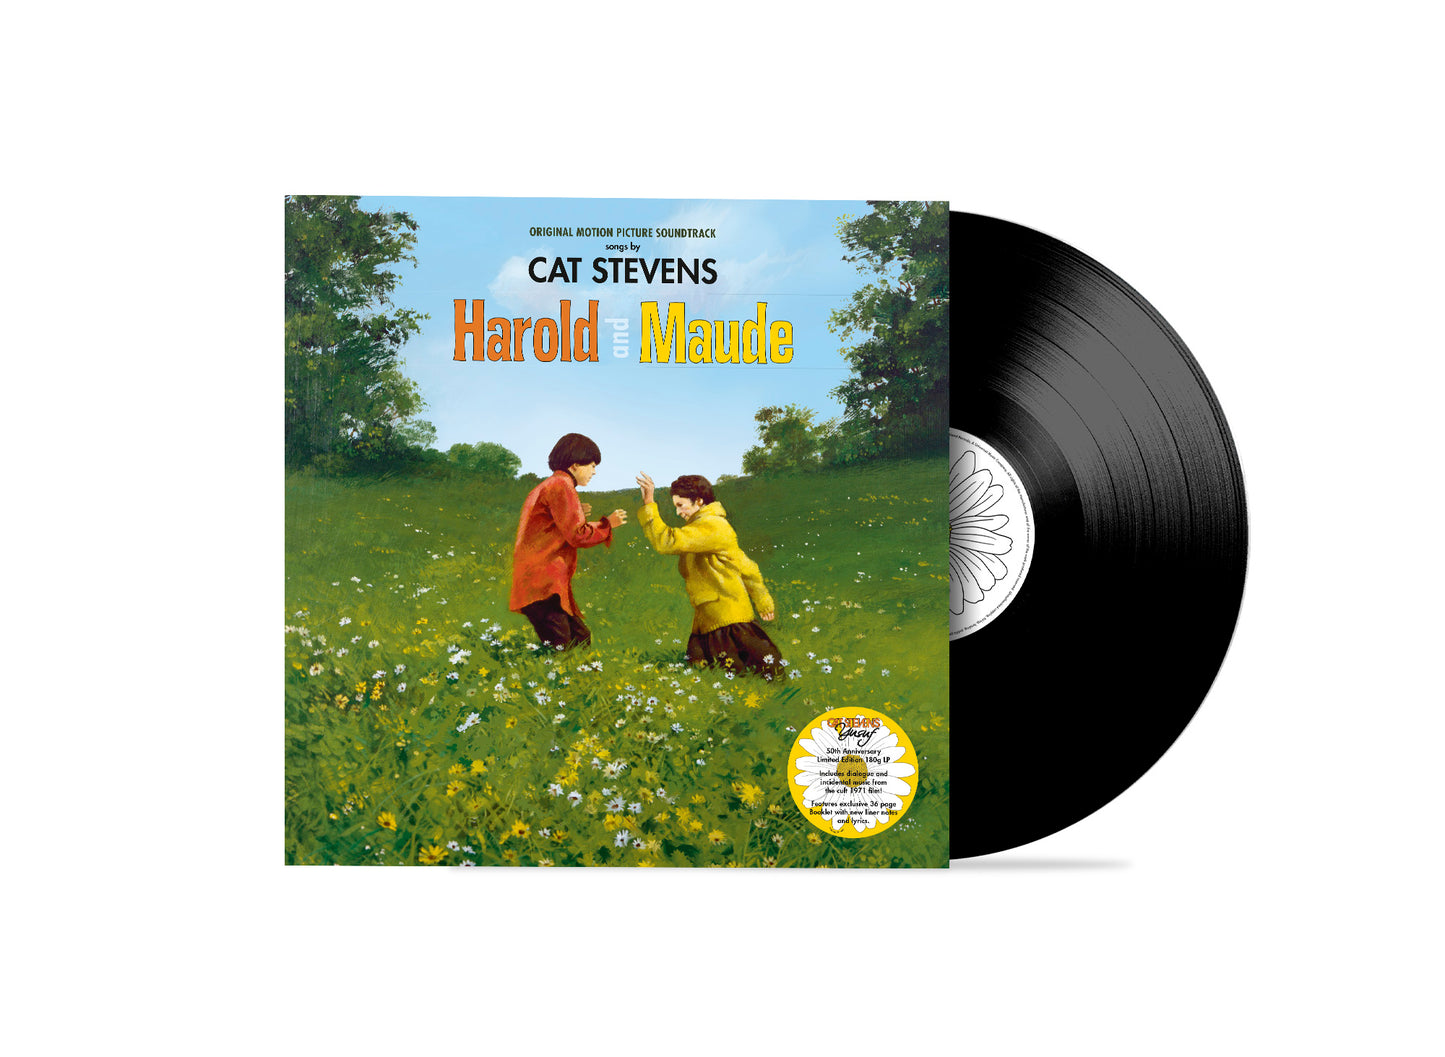 Harold and Maude (Original Motion Picture Soundtrack) LP